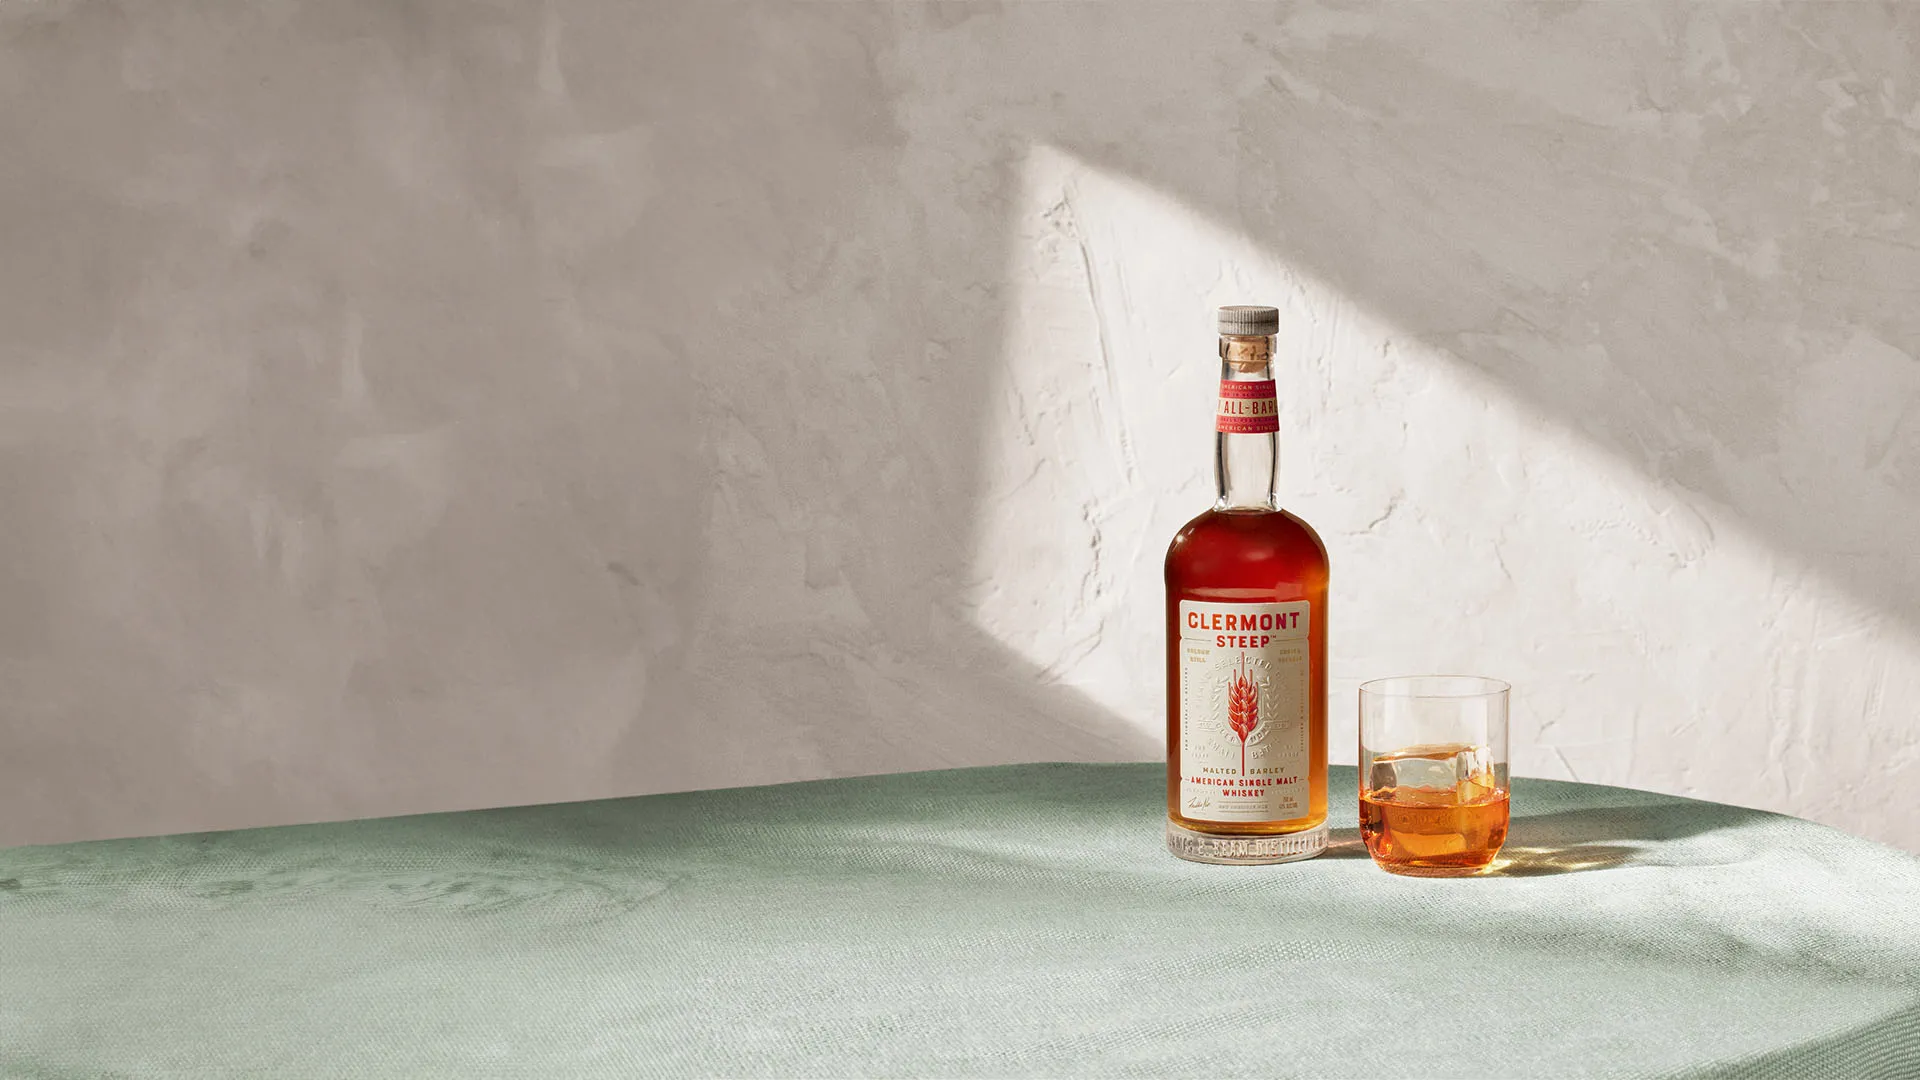 james b beam distilling co introduces clermont steep american single malt whiskey